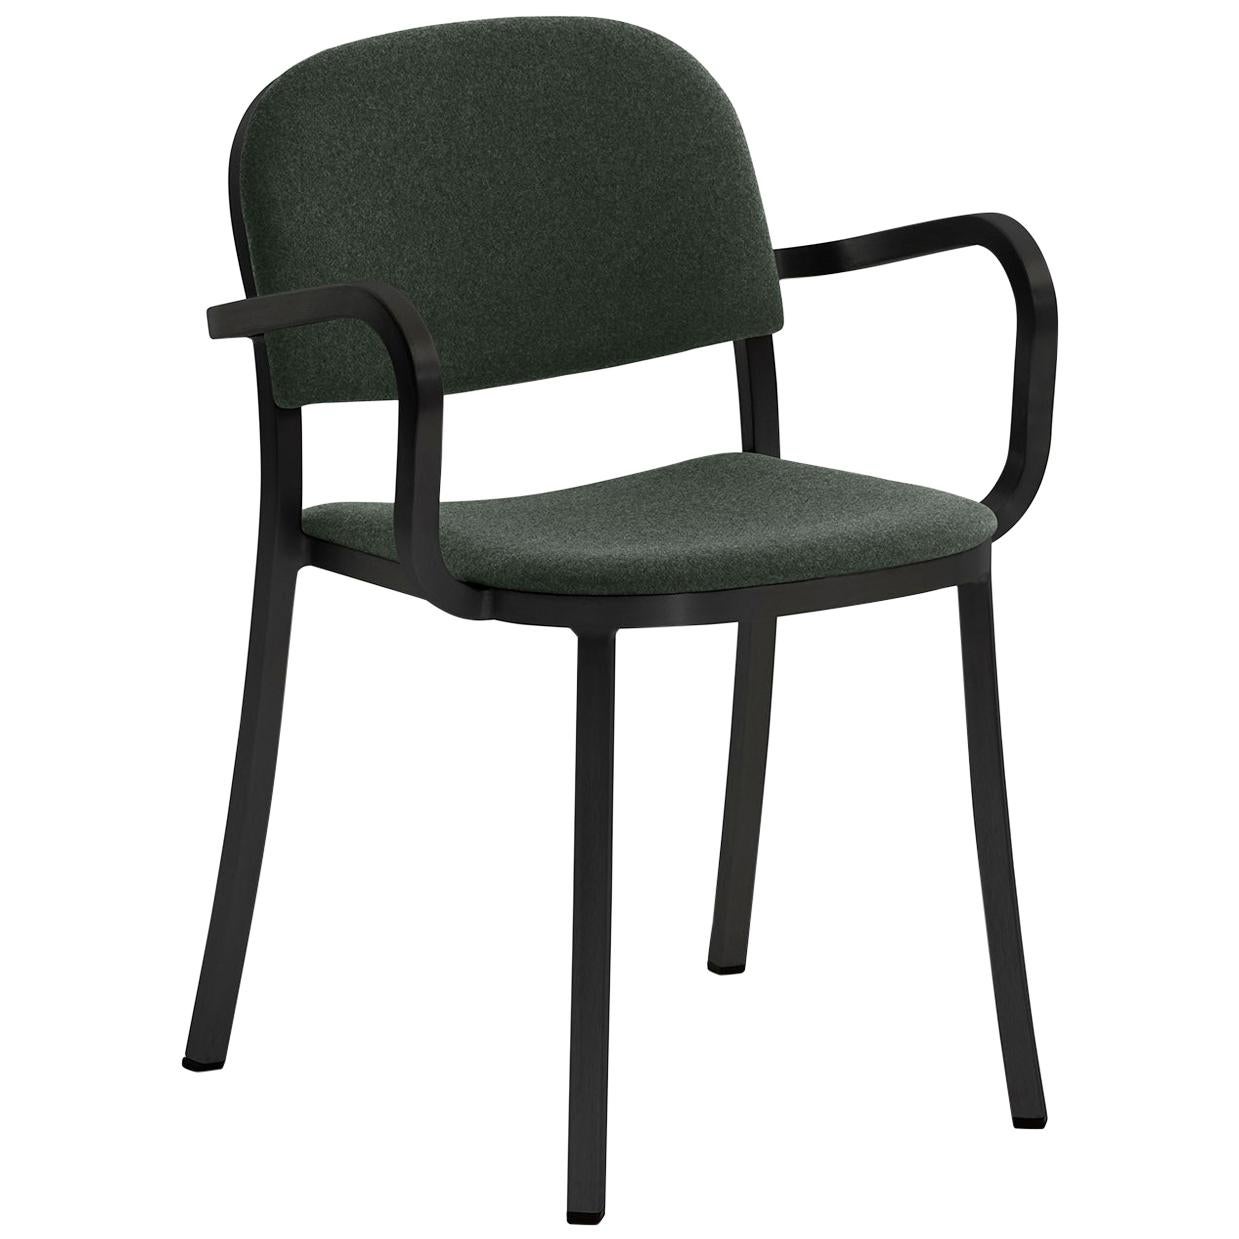 Emeco 1 Inch Armchair in Black Frame & Green Upholstery by Jasper Morrison